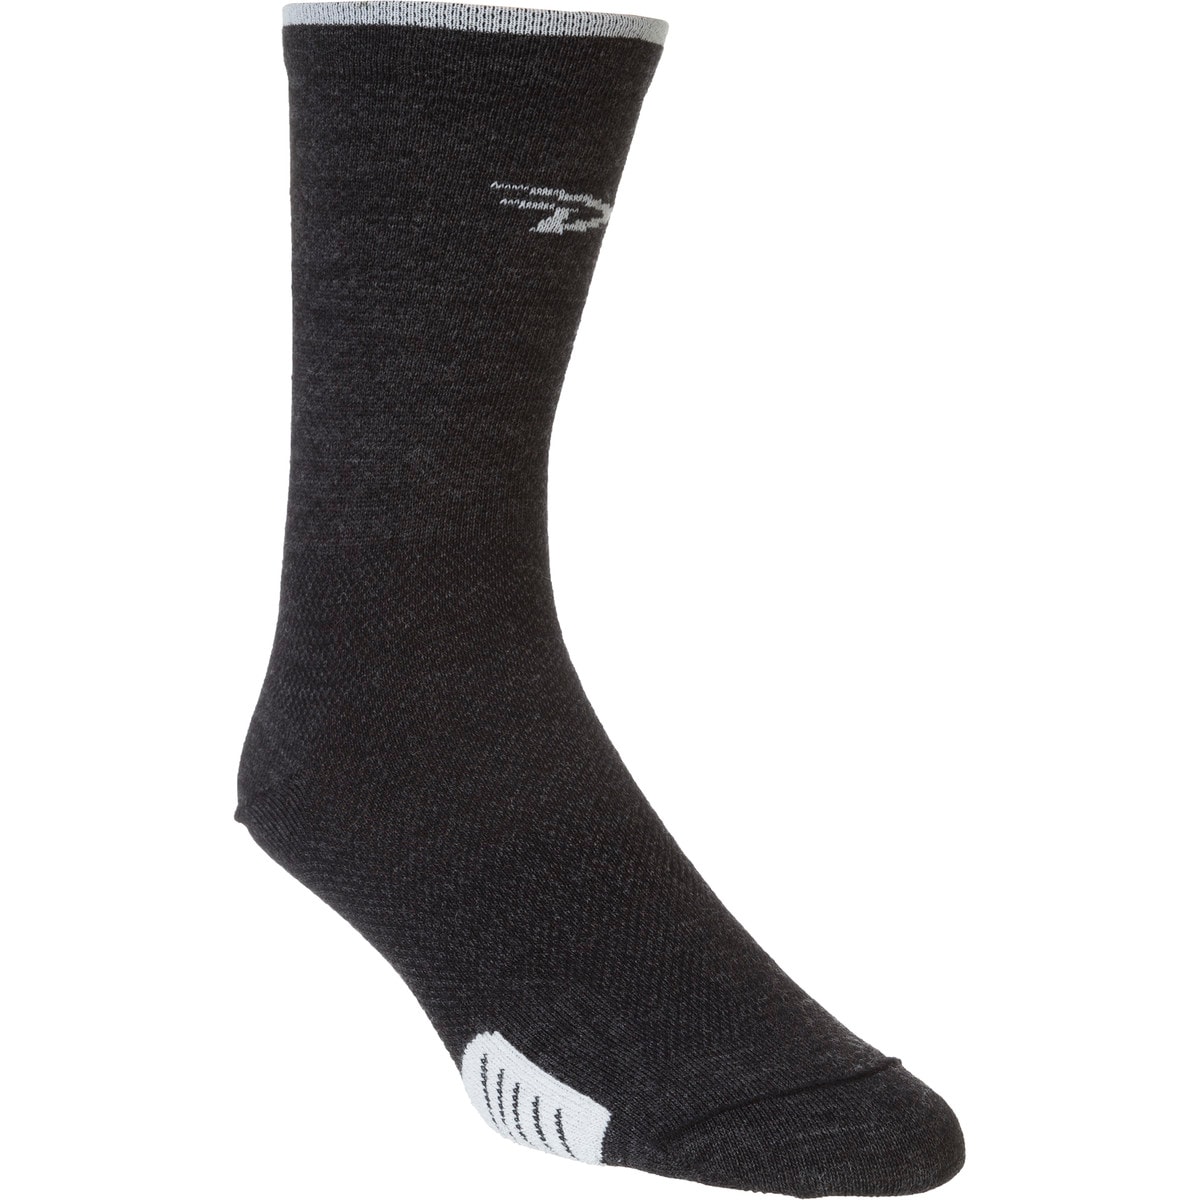 DeFeet Cyclismo Wool 5in Socks Men's